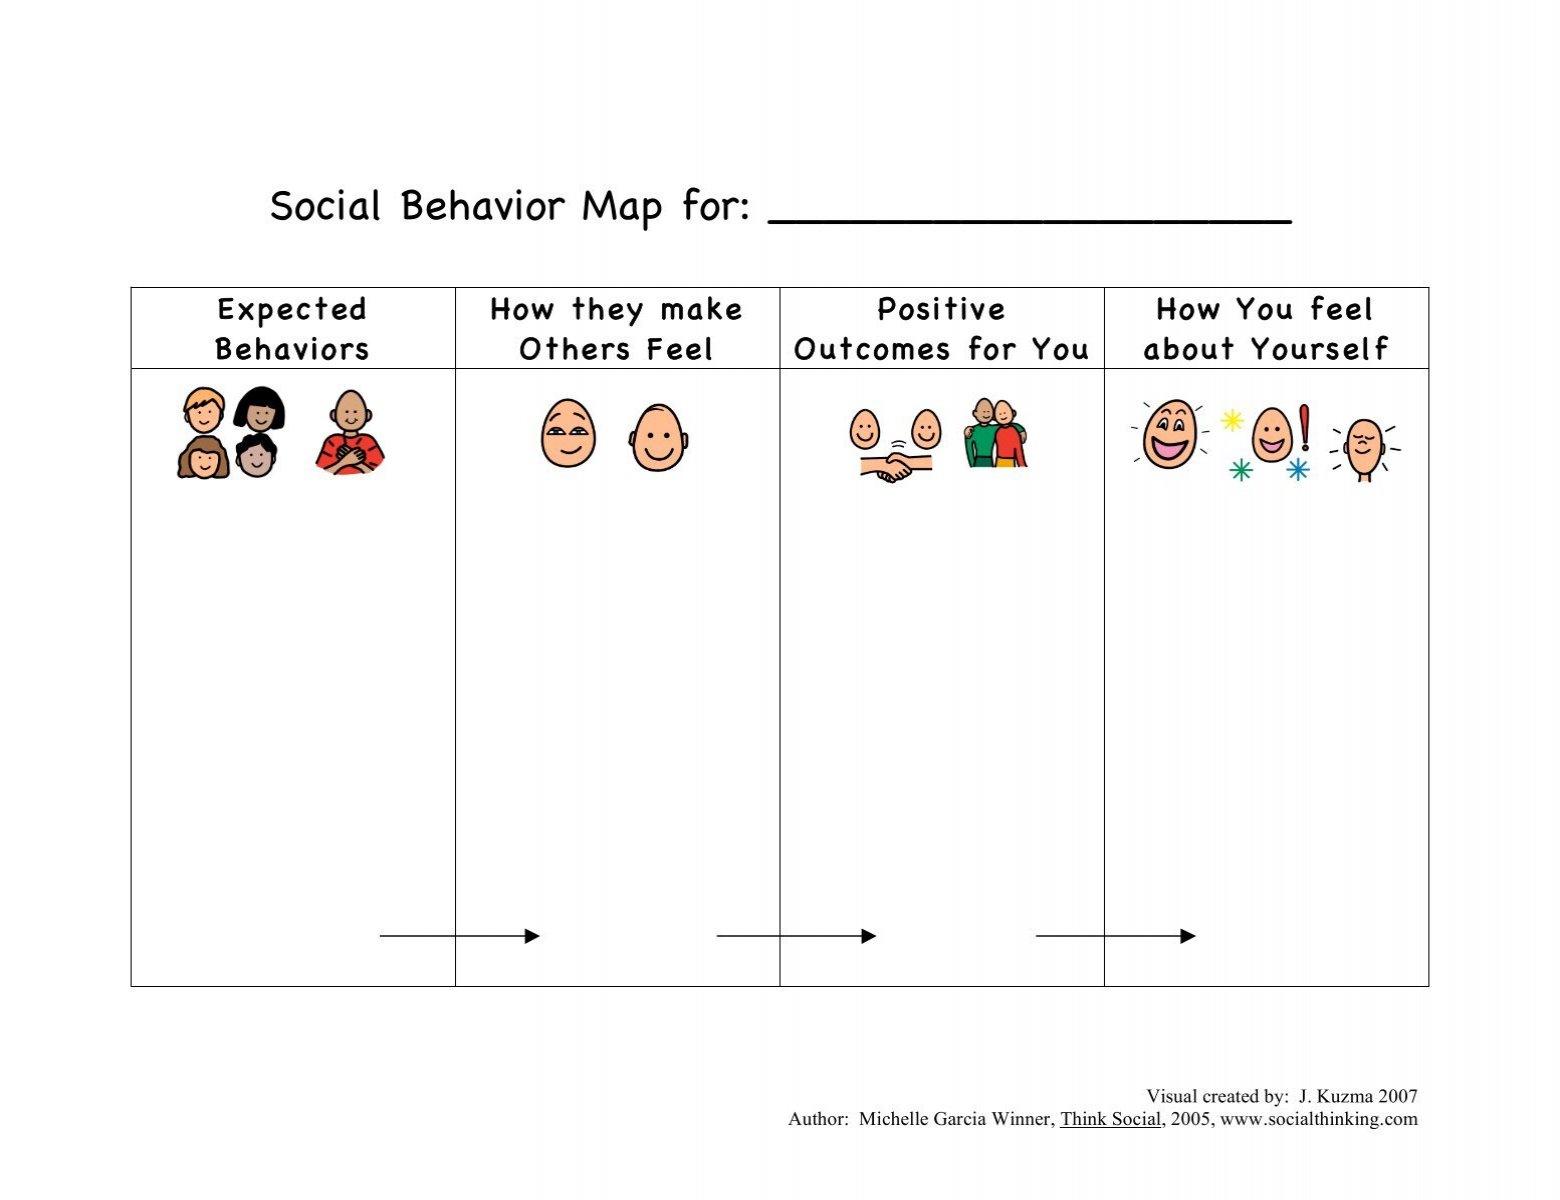 Social Behavior Map Template â Expected Behaviors